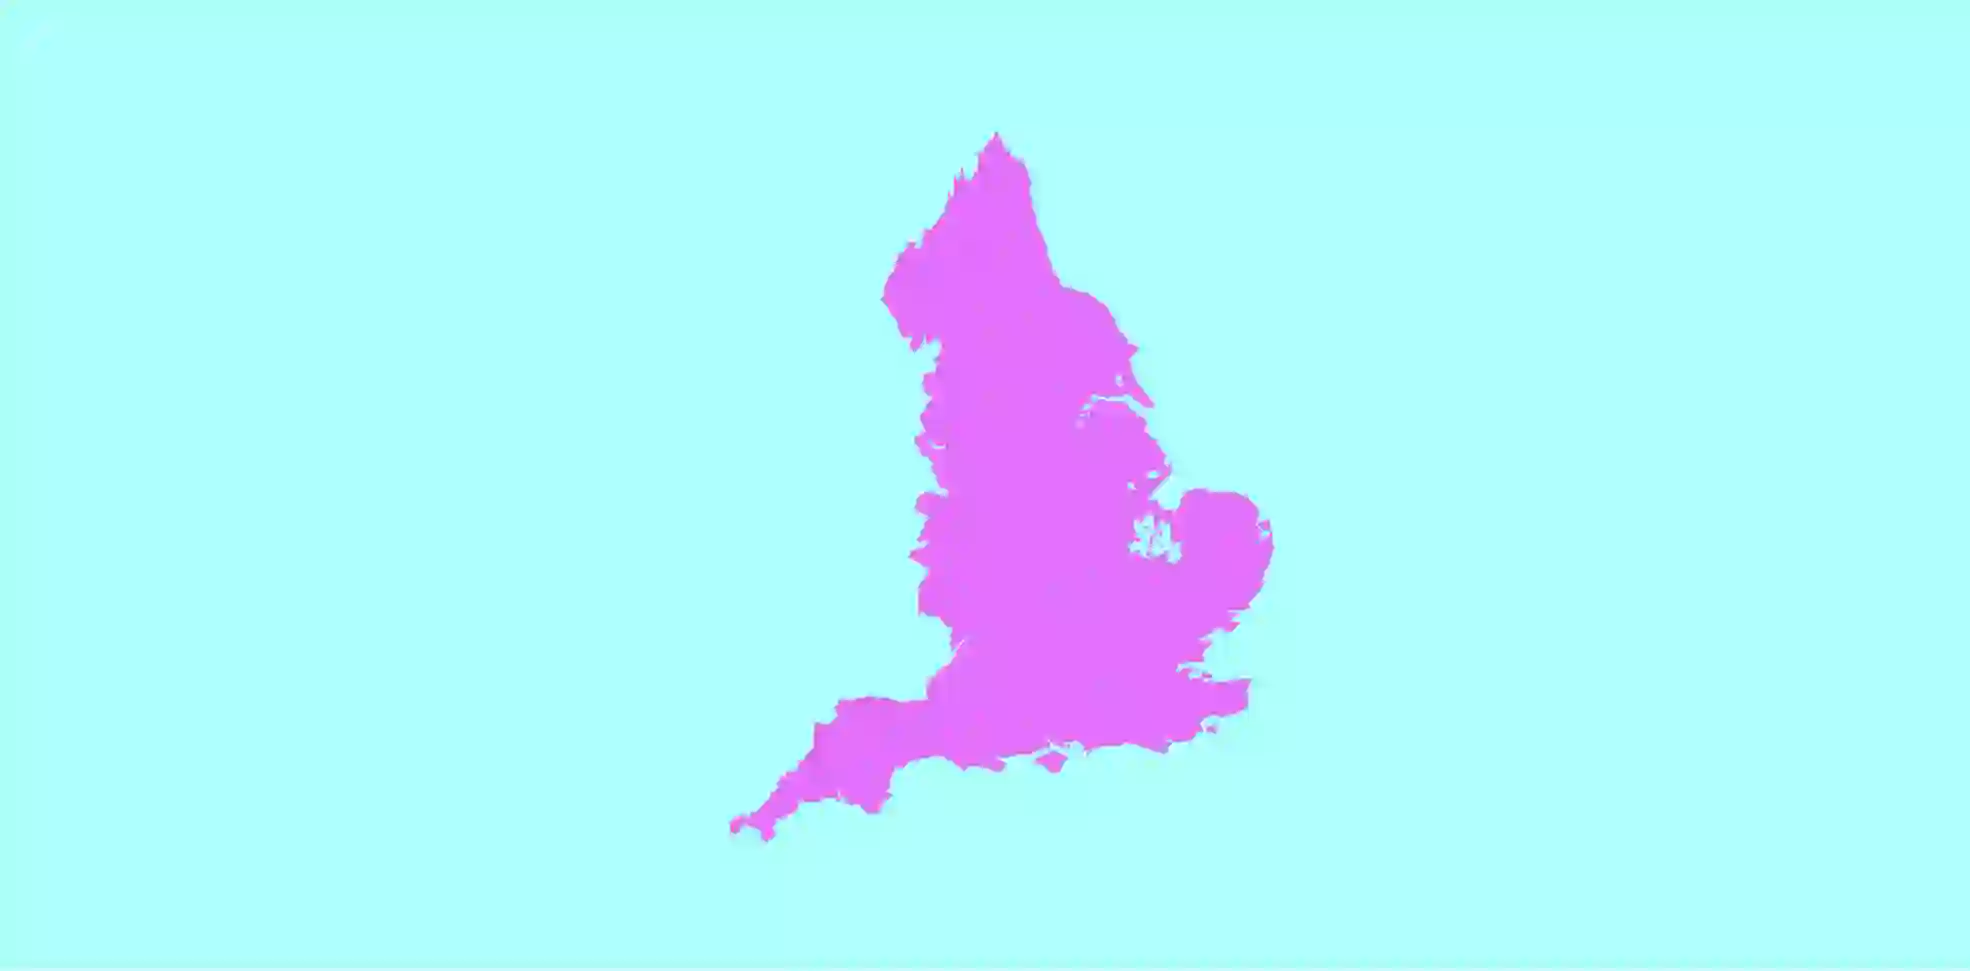 purple silhouette of the UK on aqua background